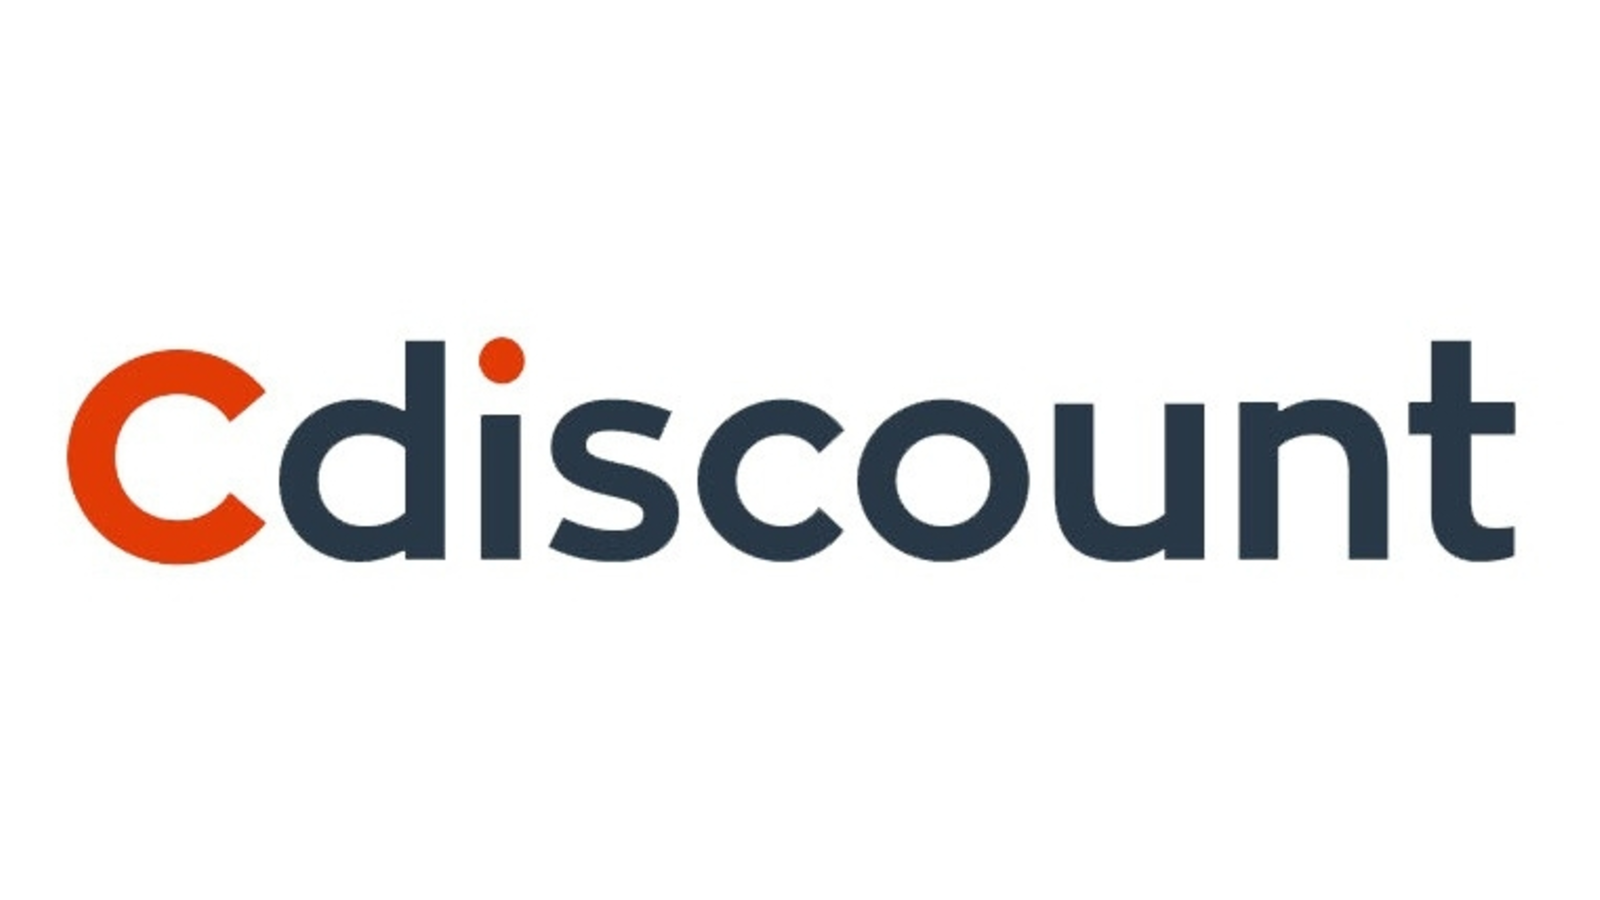 logo-Cdiscount-01.png